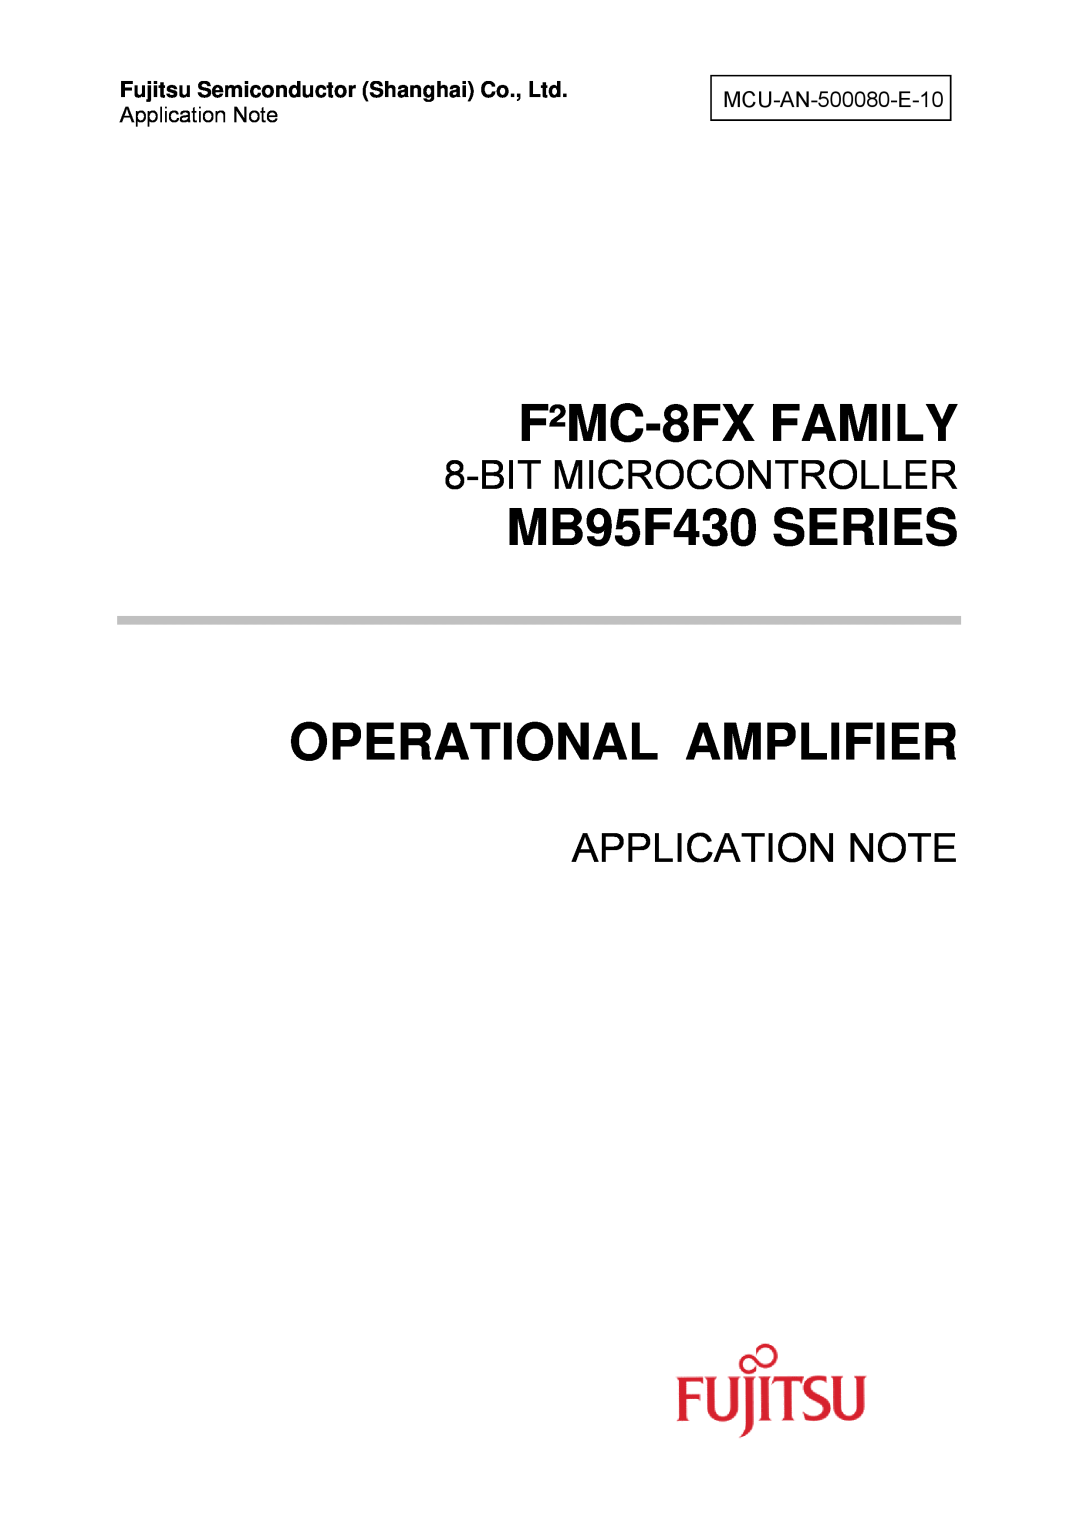 Fujitsu manual F²MC-8FXFAMILY, MB95F430 SERIES OPERATIONAL AMPLIFIER, Bitmicrocontroller, Application Note 